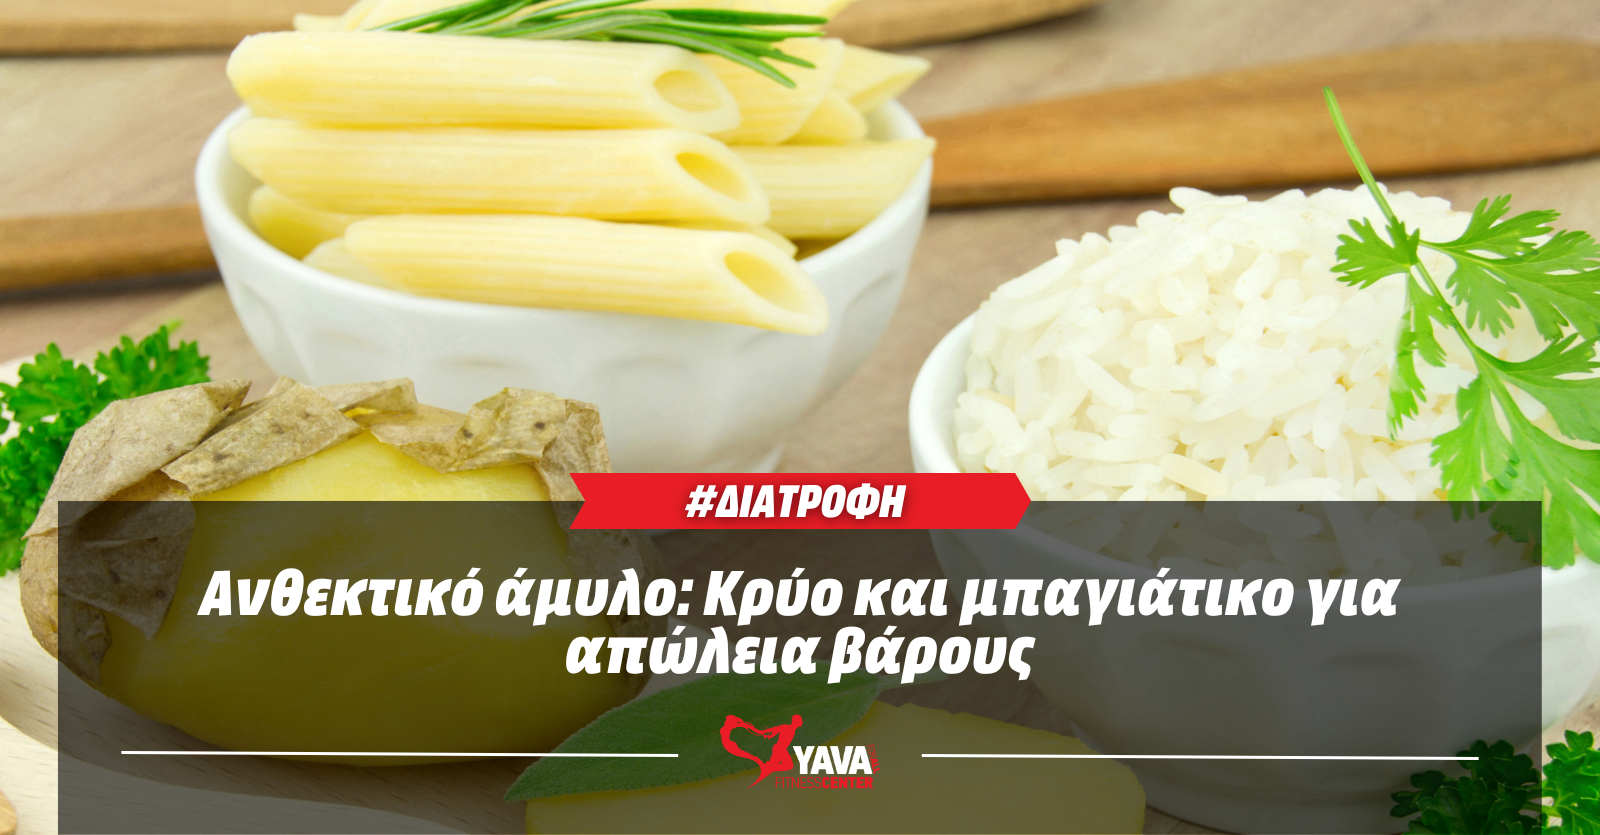 www.yava.gr